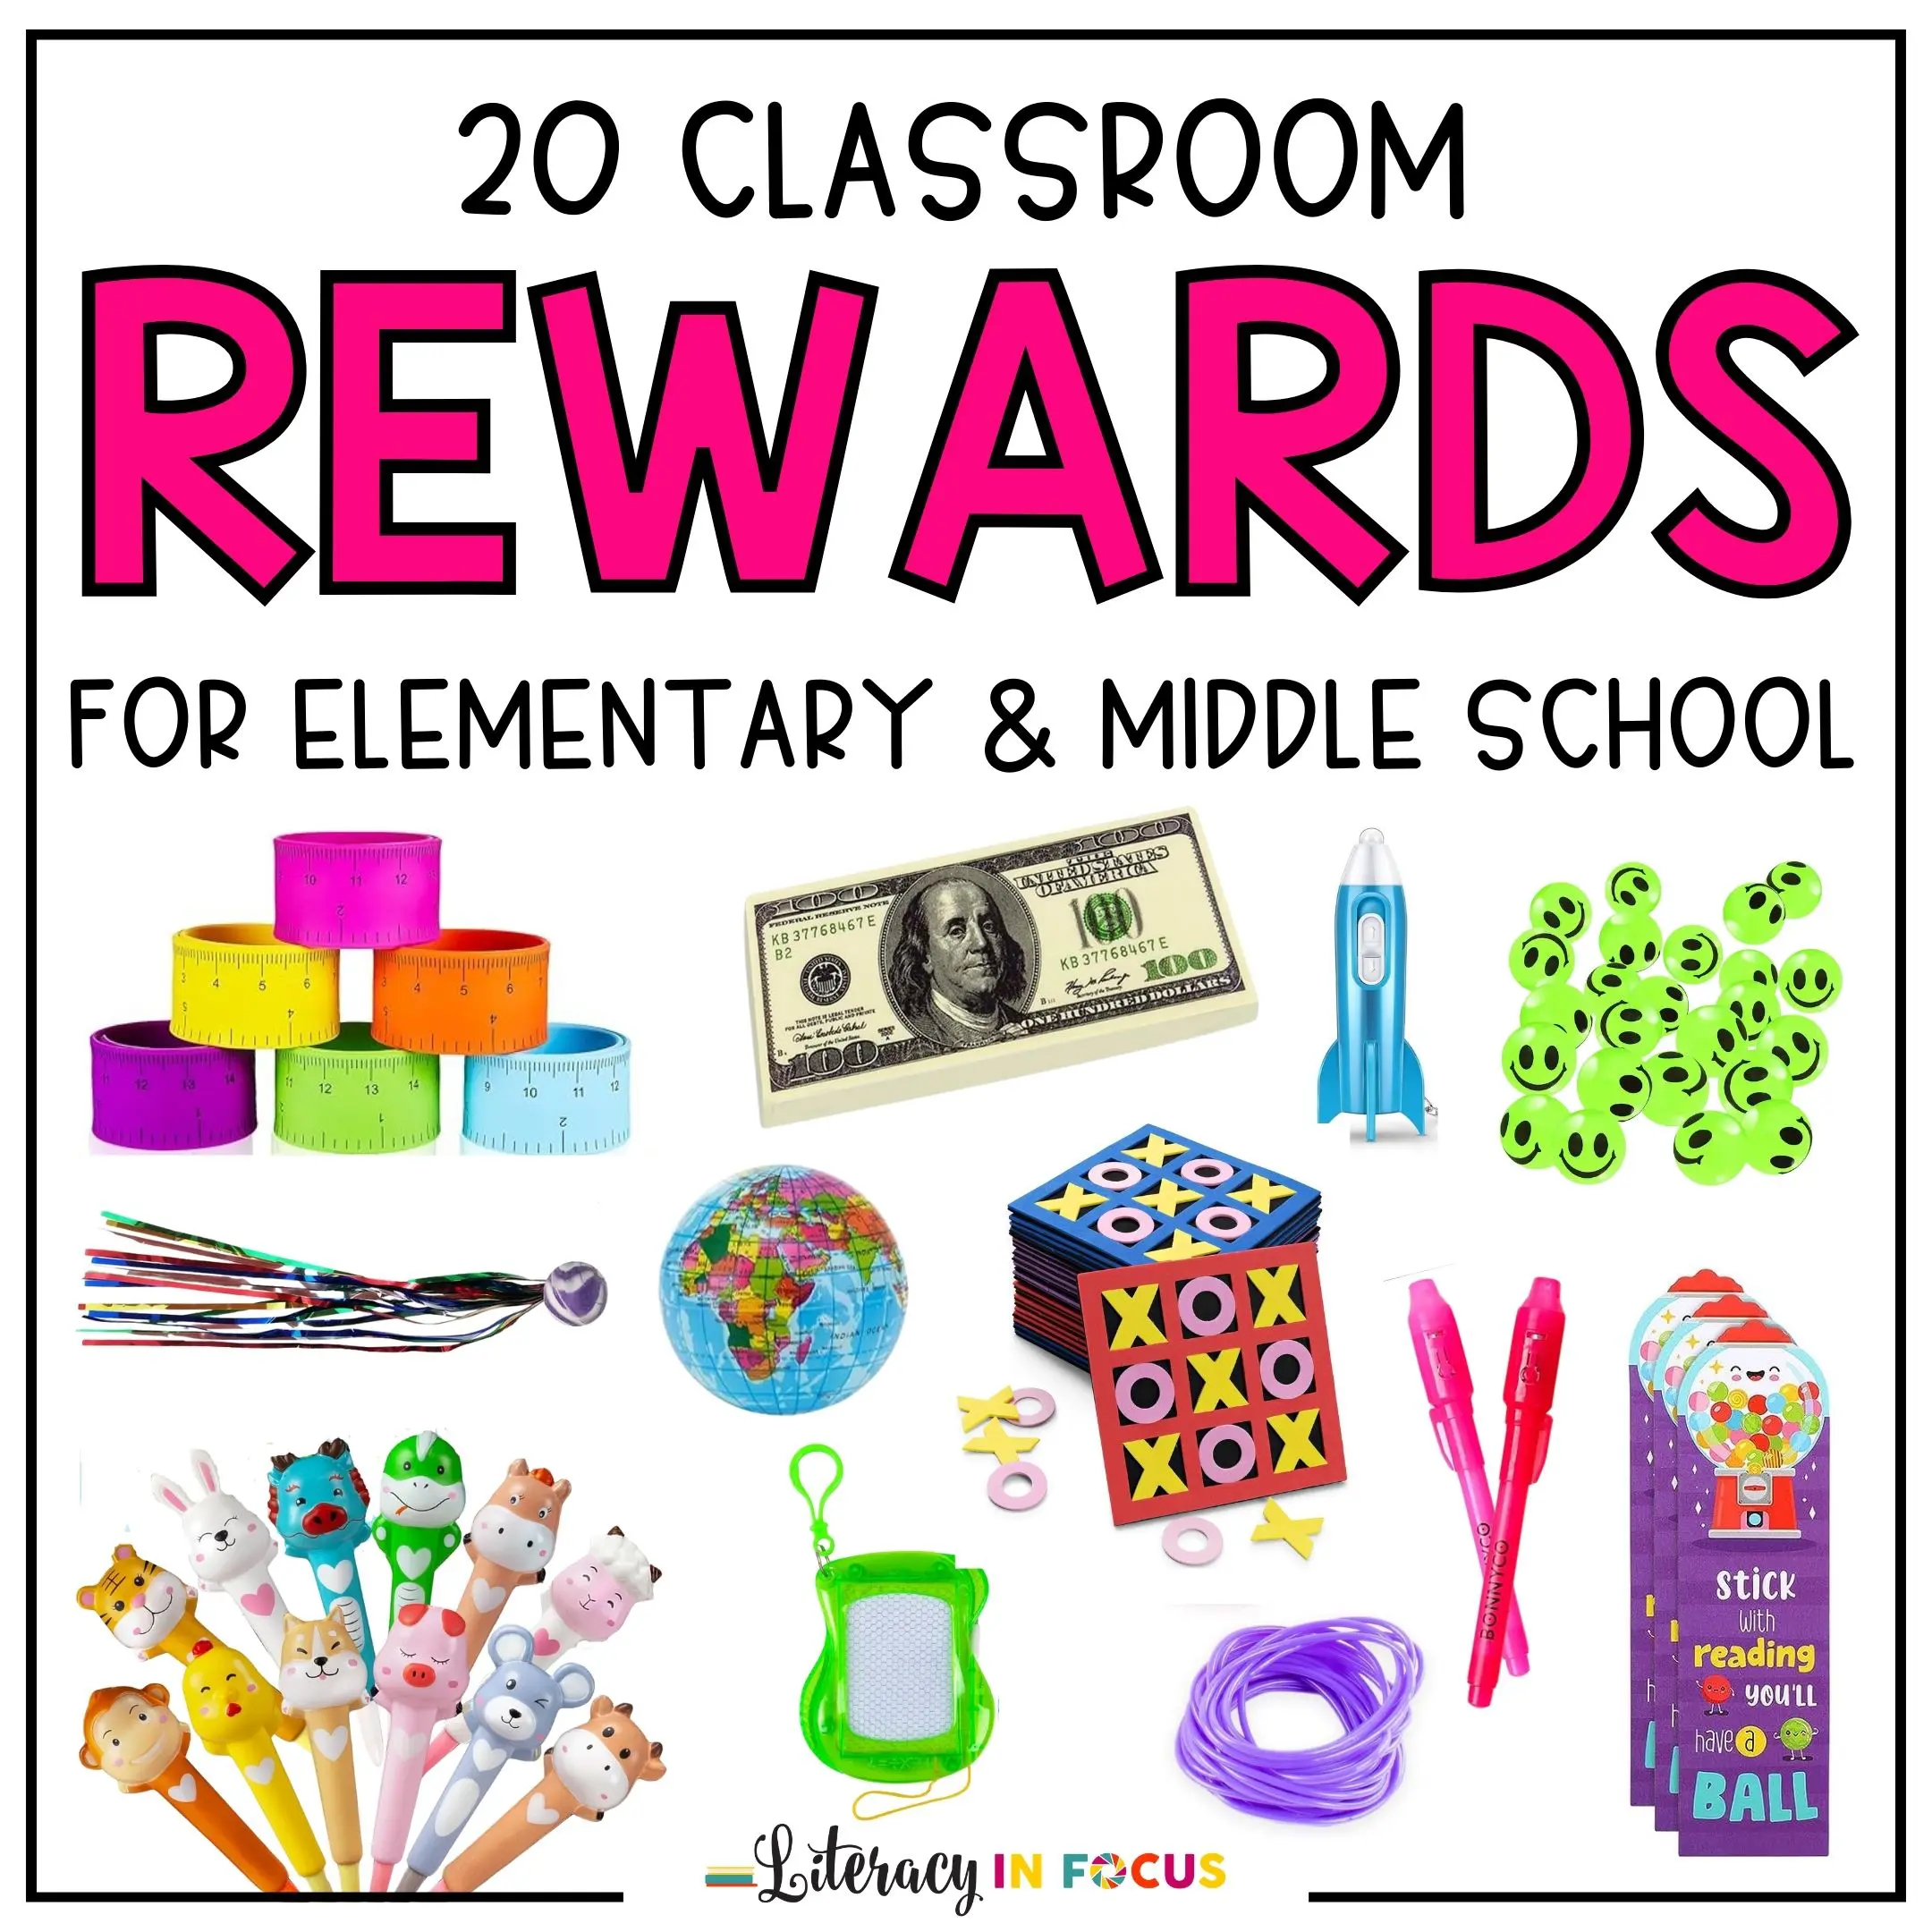 20 classroom rewards for elementary